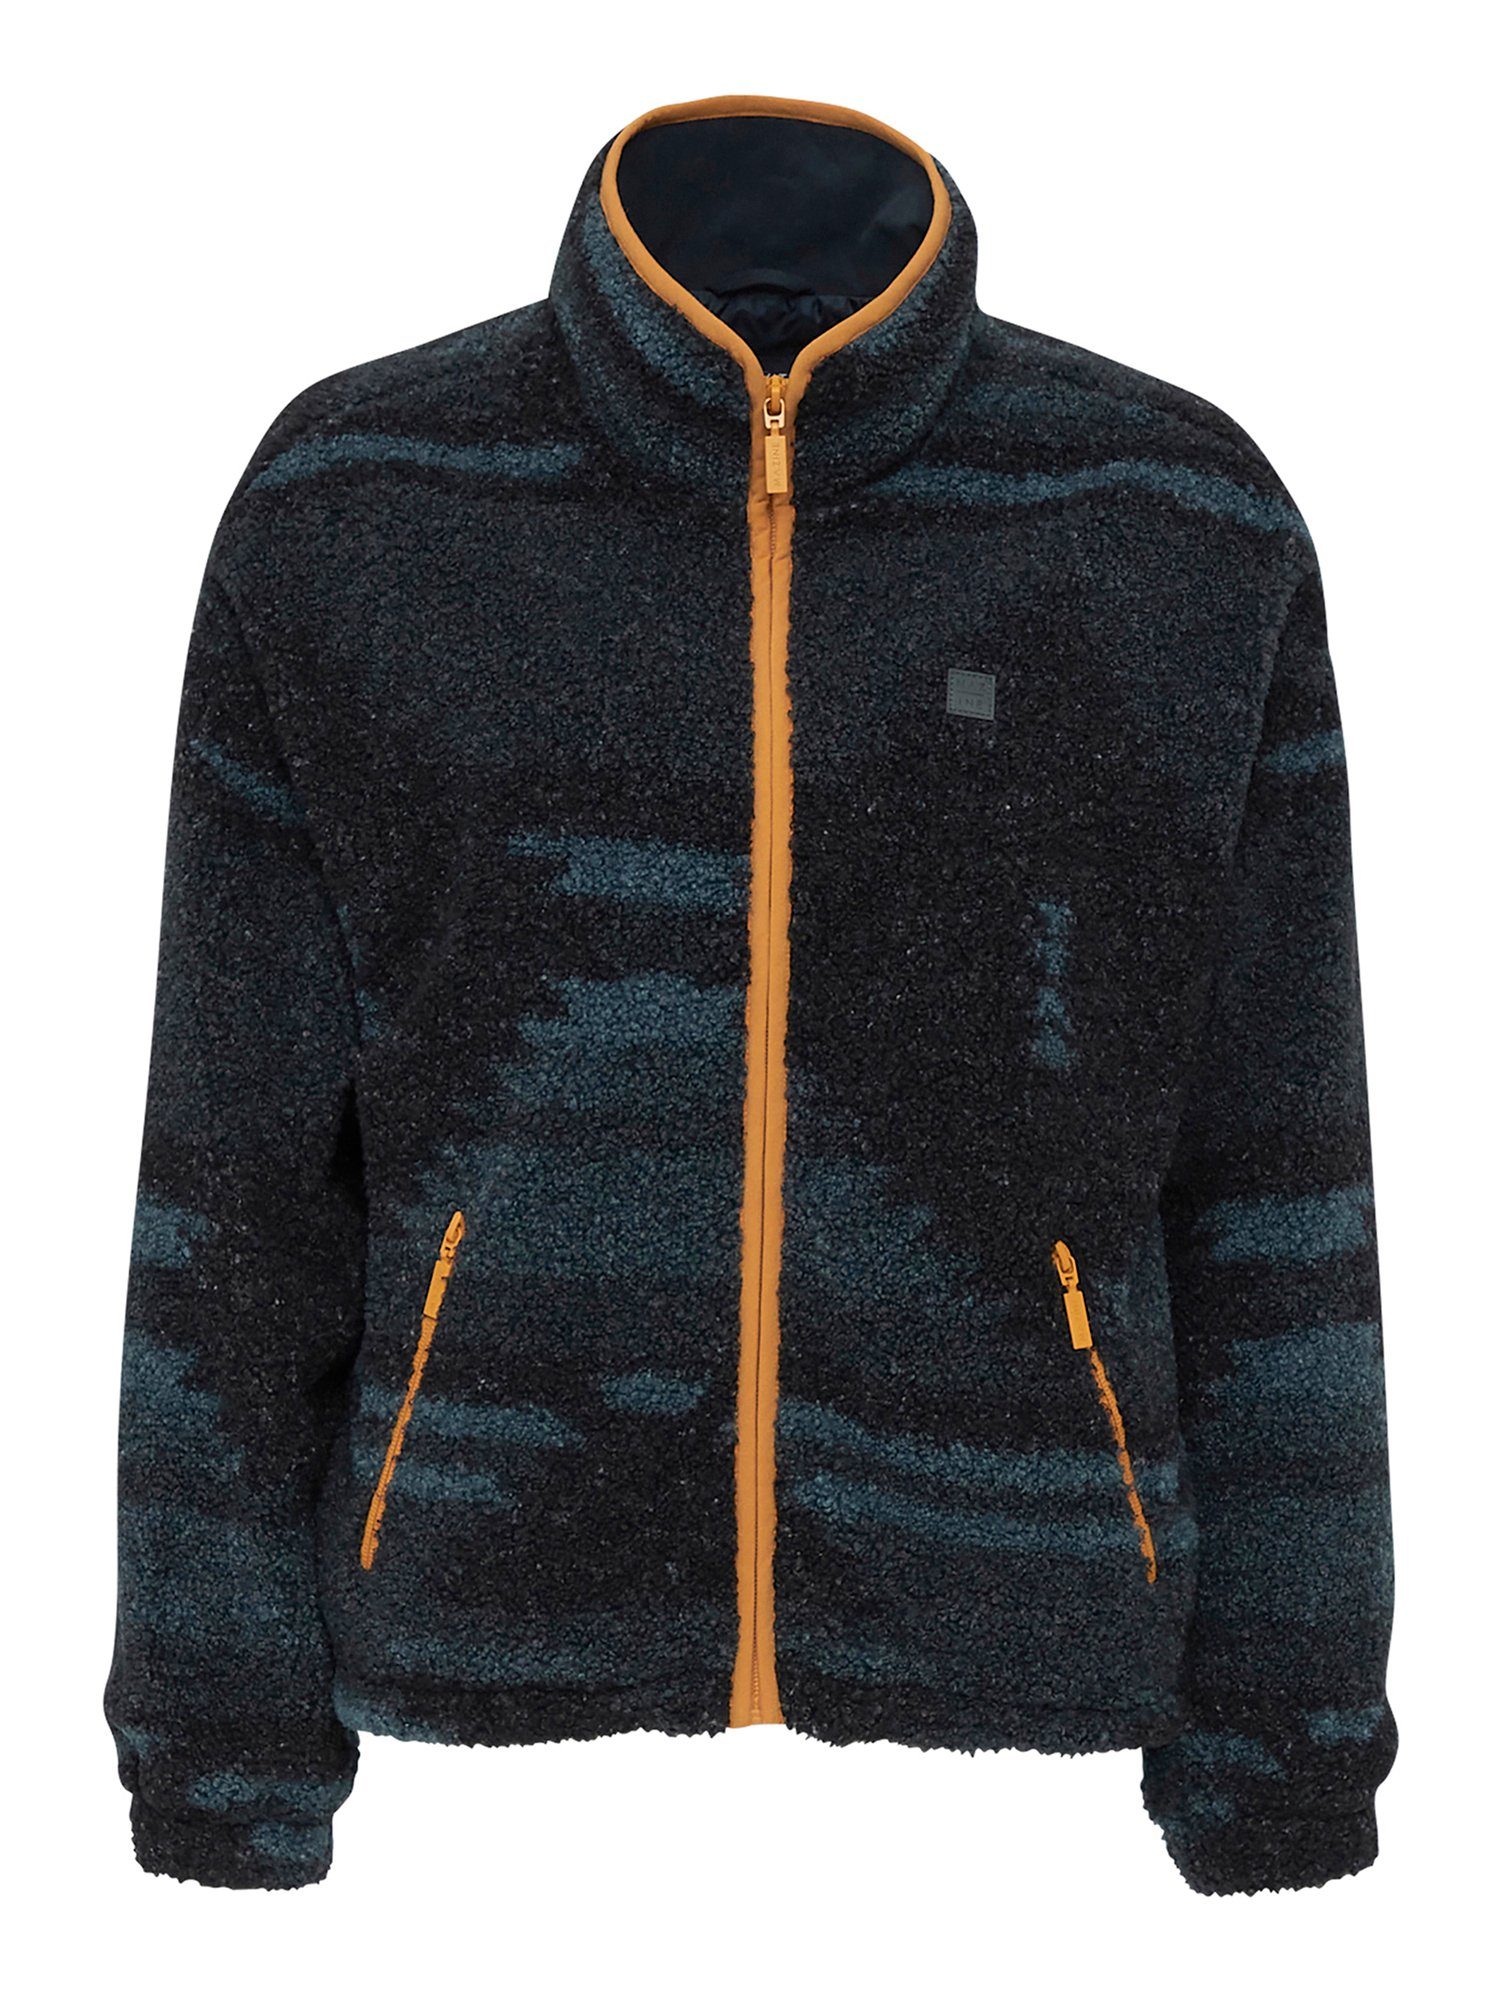 MAZINE Fleecejacke Salida Jacket leicht warm ink blue/printed | Übergangsjacken